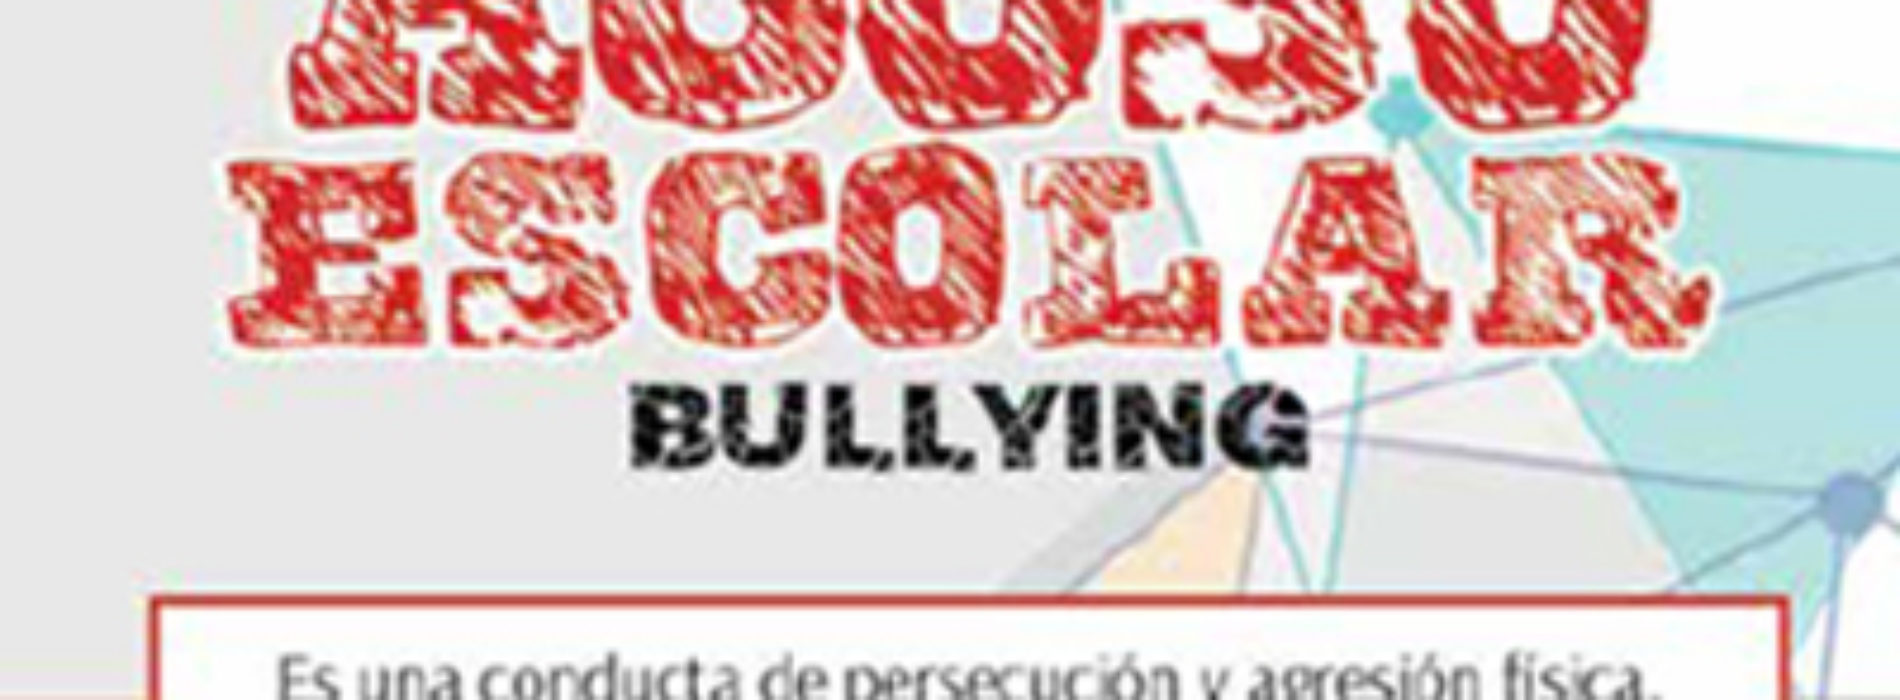 Impulsa CECyTEO campaña para combatir bullying en planteles educativos